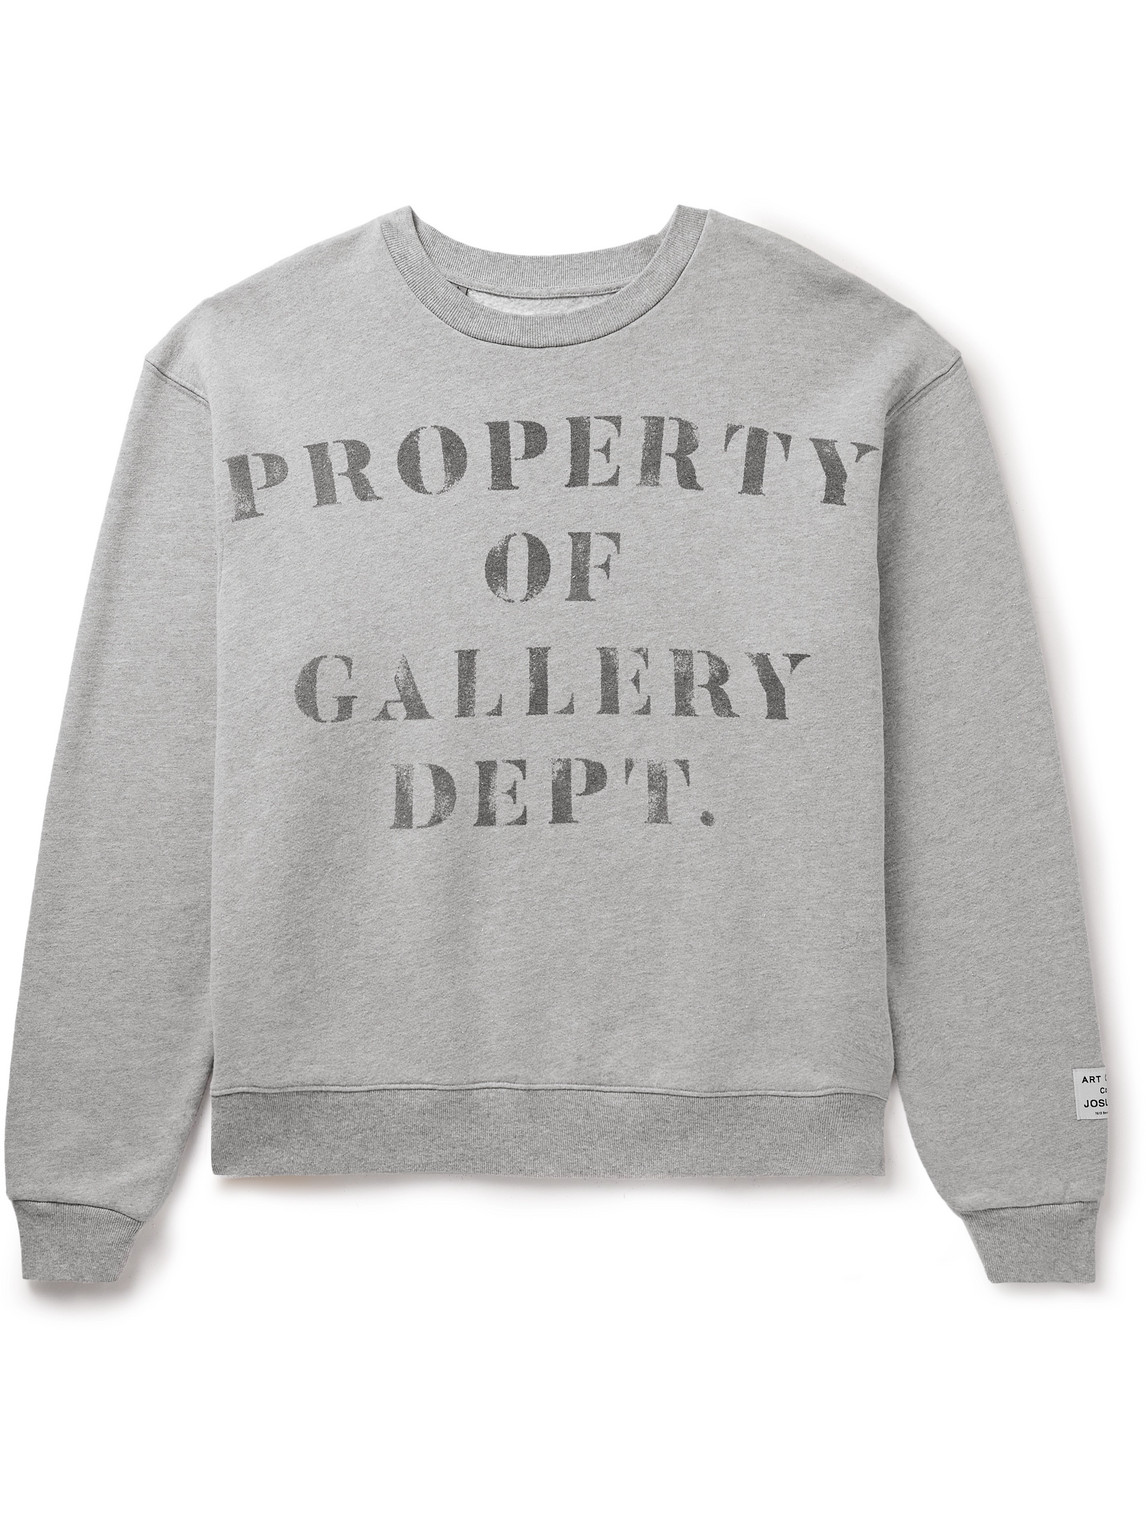 Gallery Dept. Printed Cotton-jersey Sweatshirt In Gray